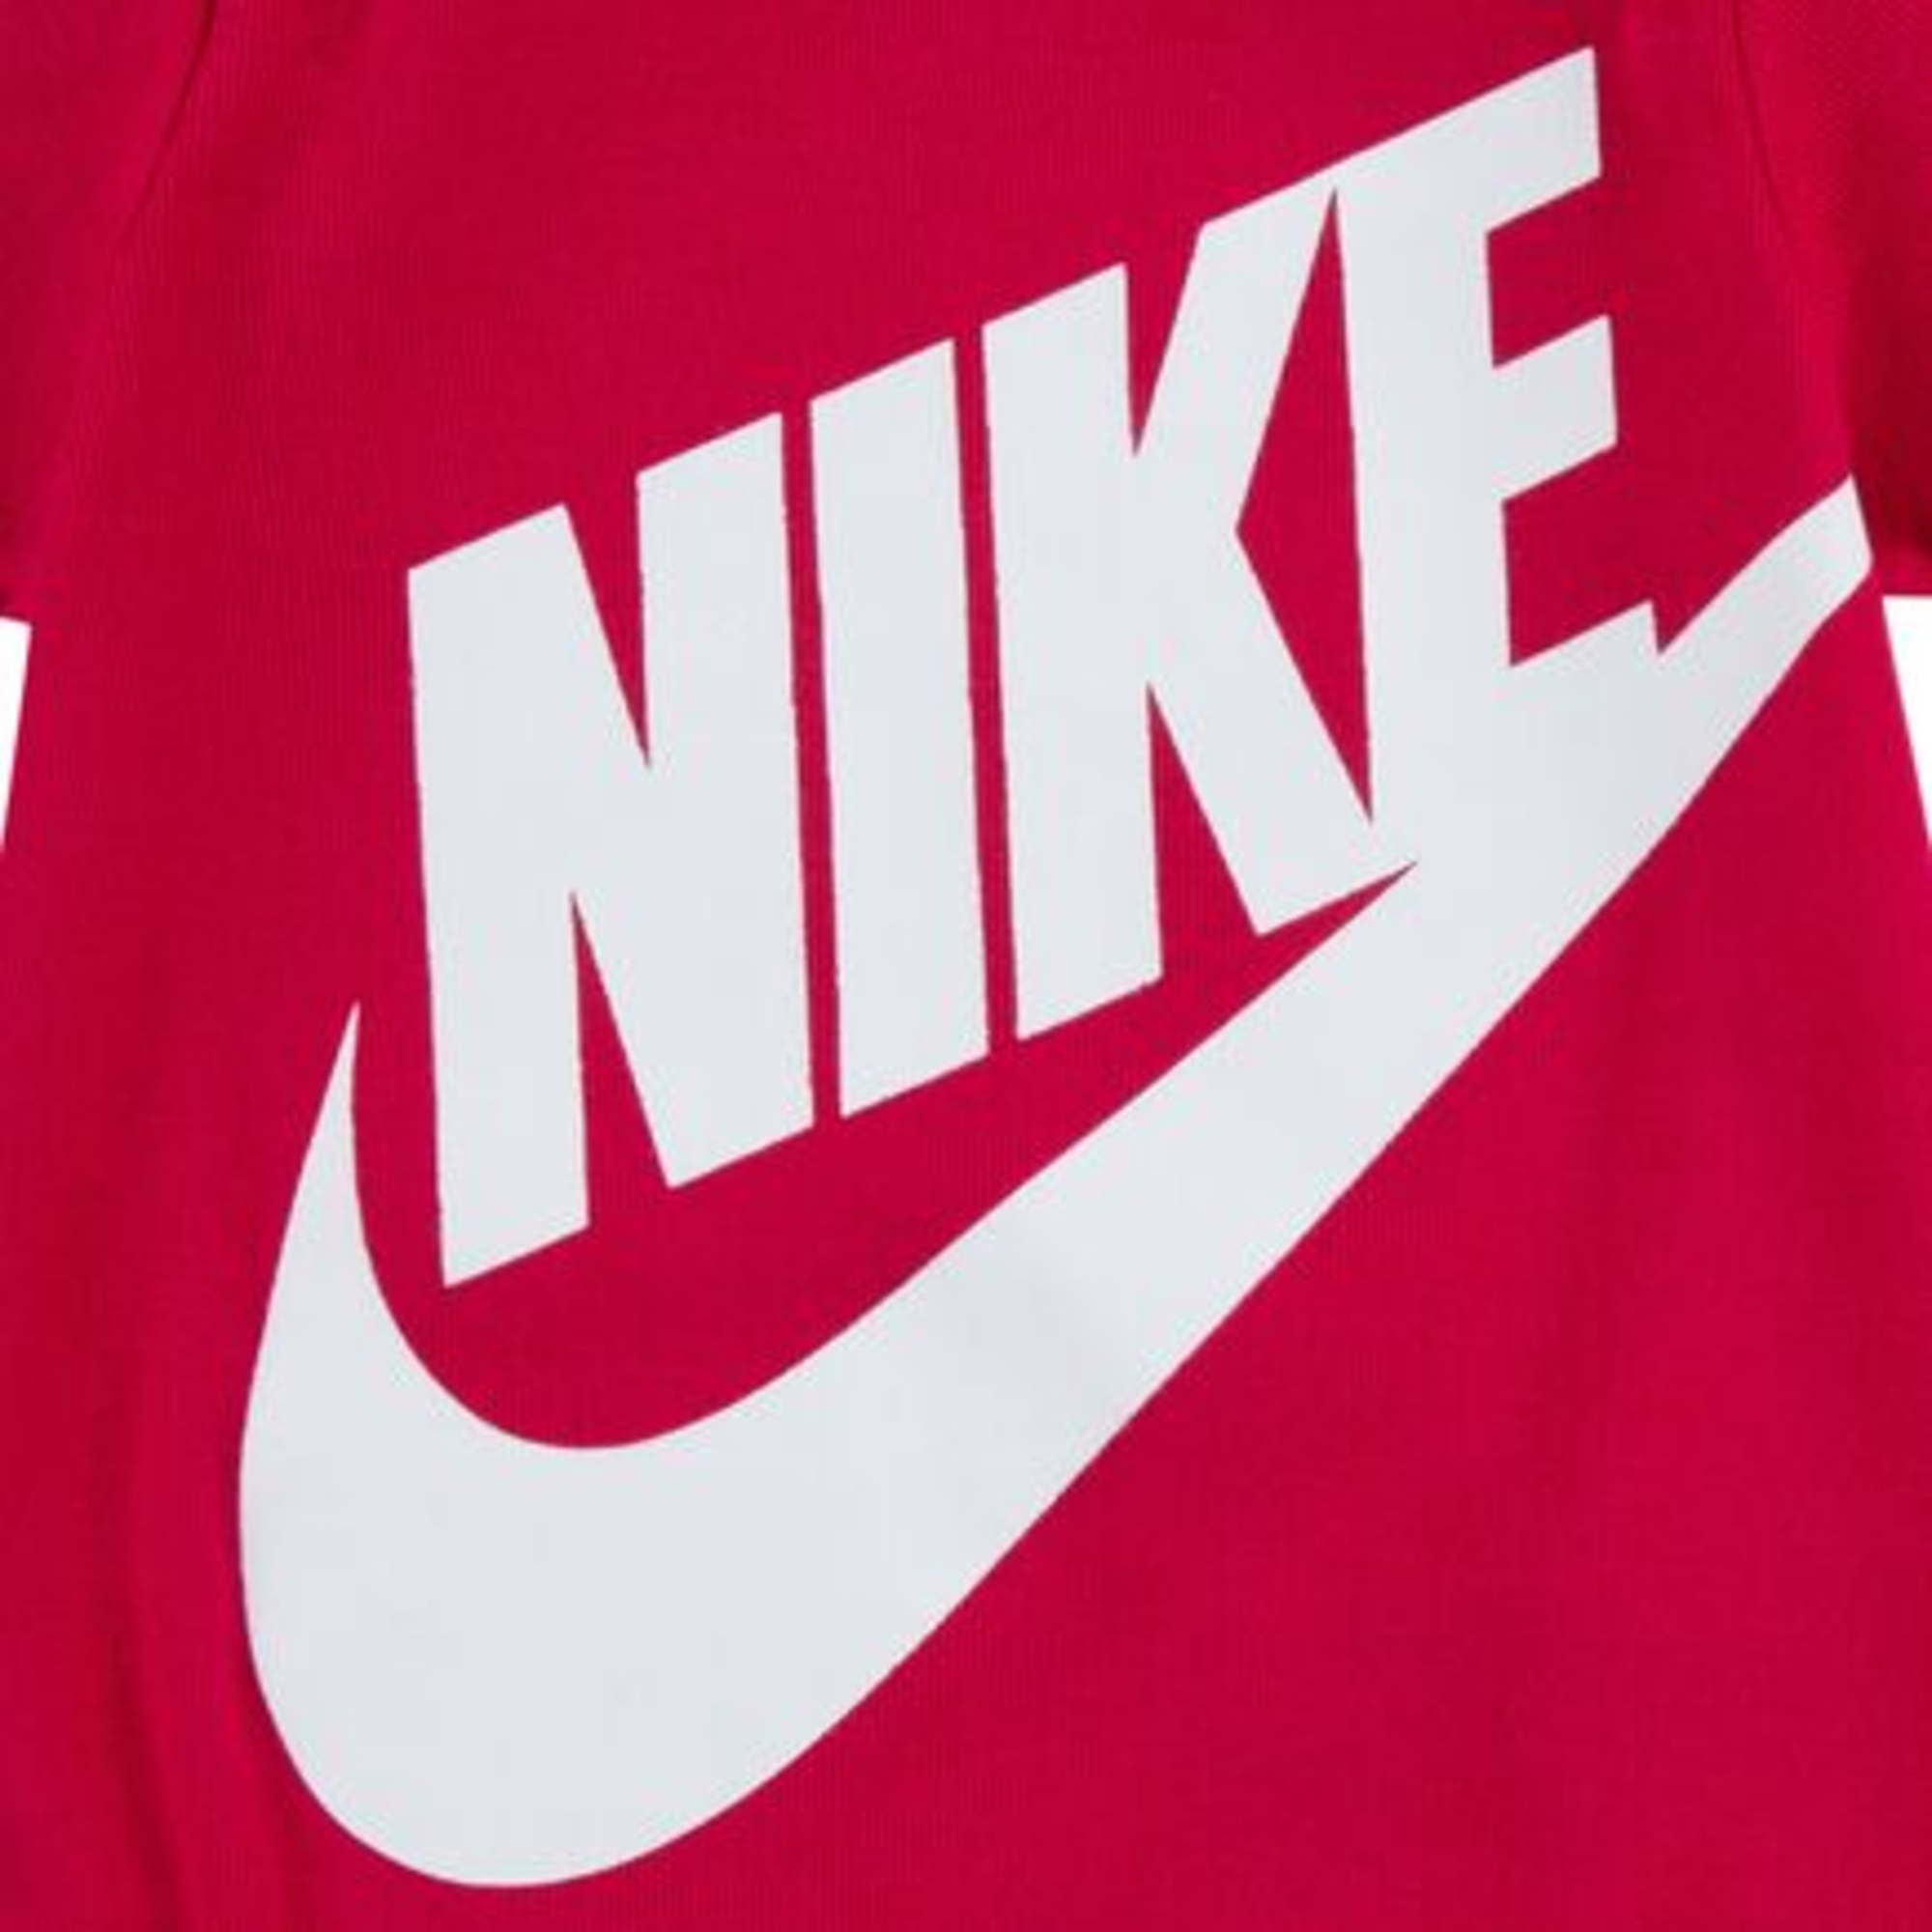 Nhn futura logo box set - Nike